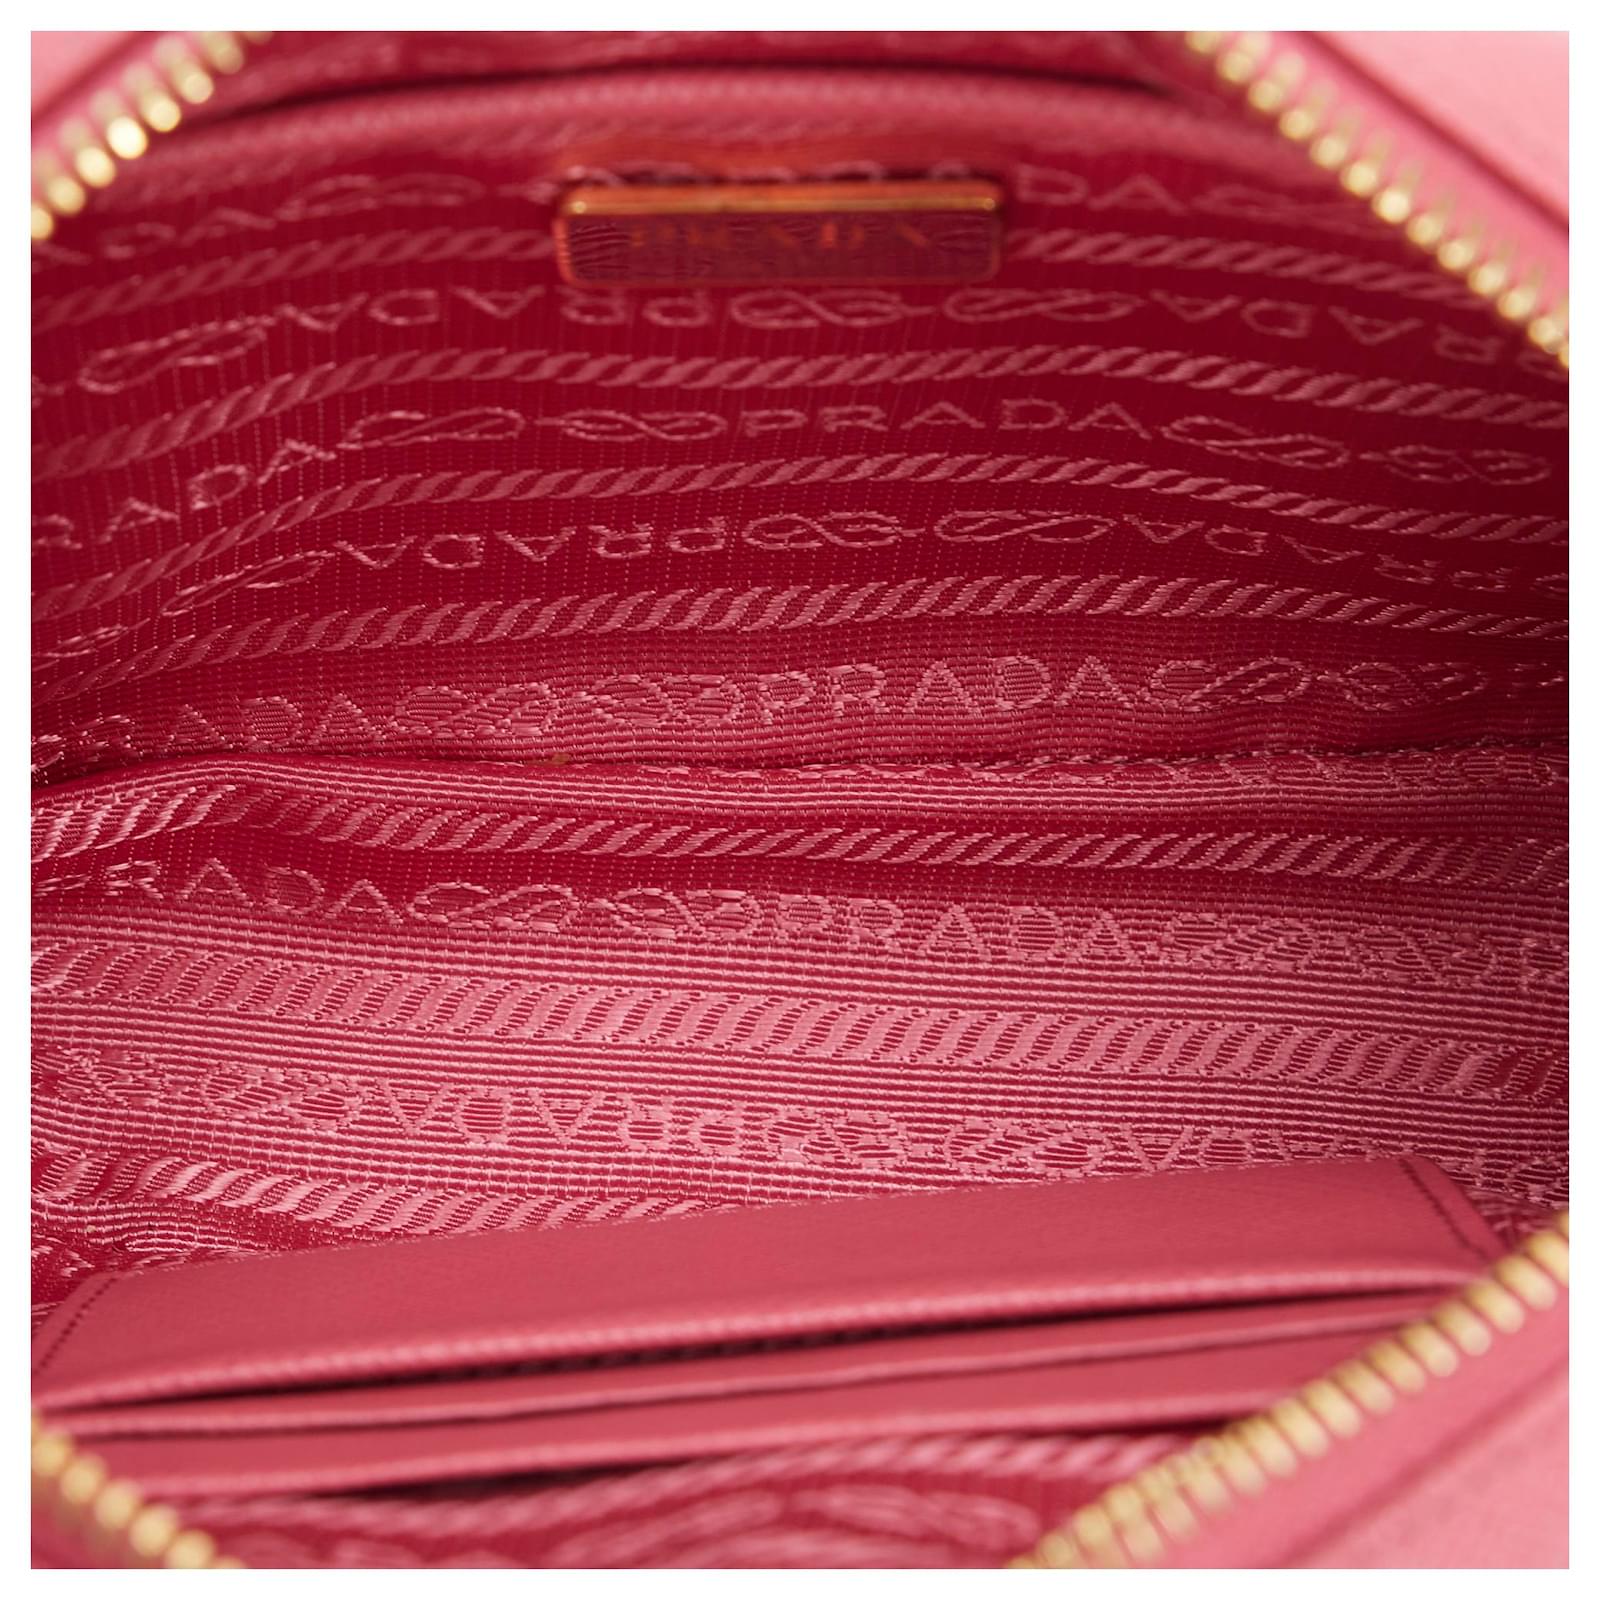 Prada Pink Saffiano Vernice Leather Flap Wallet On Strap Prada